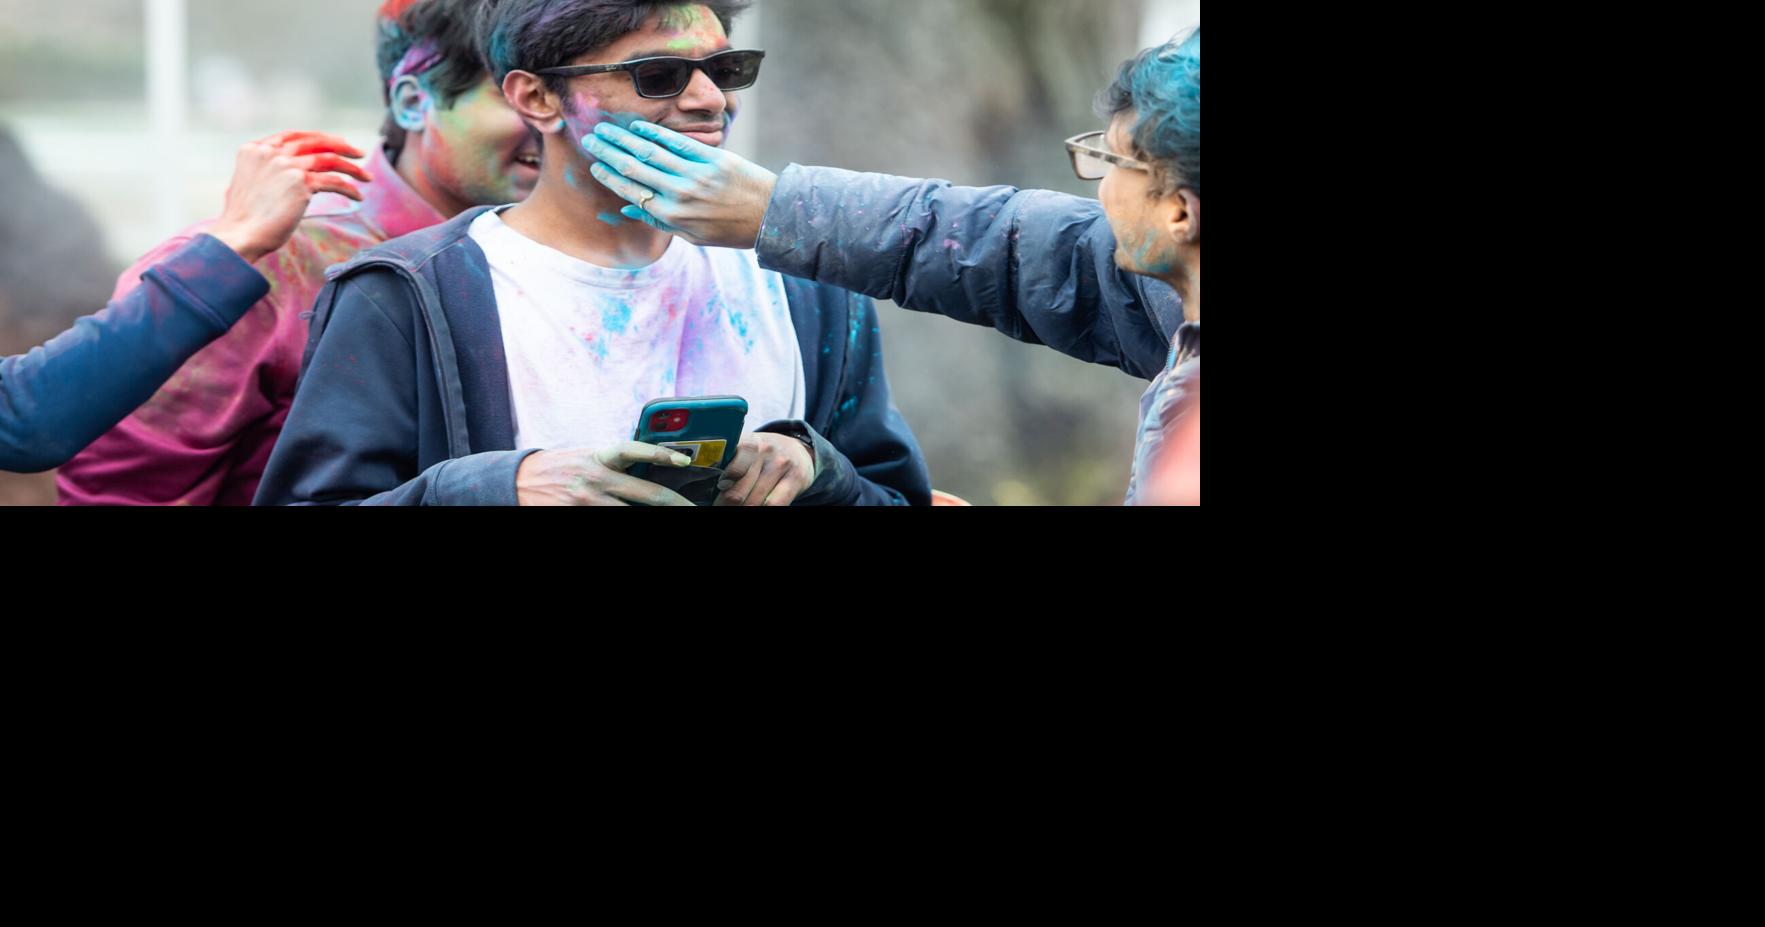 3/26/22 Holi Celebration, Varun Kumar has colors applied to his face Campus